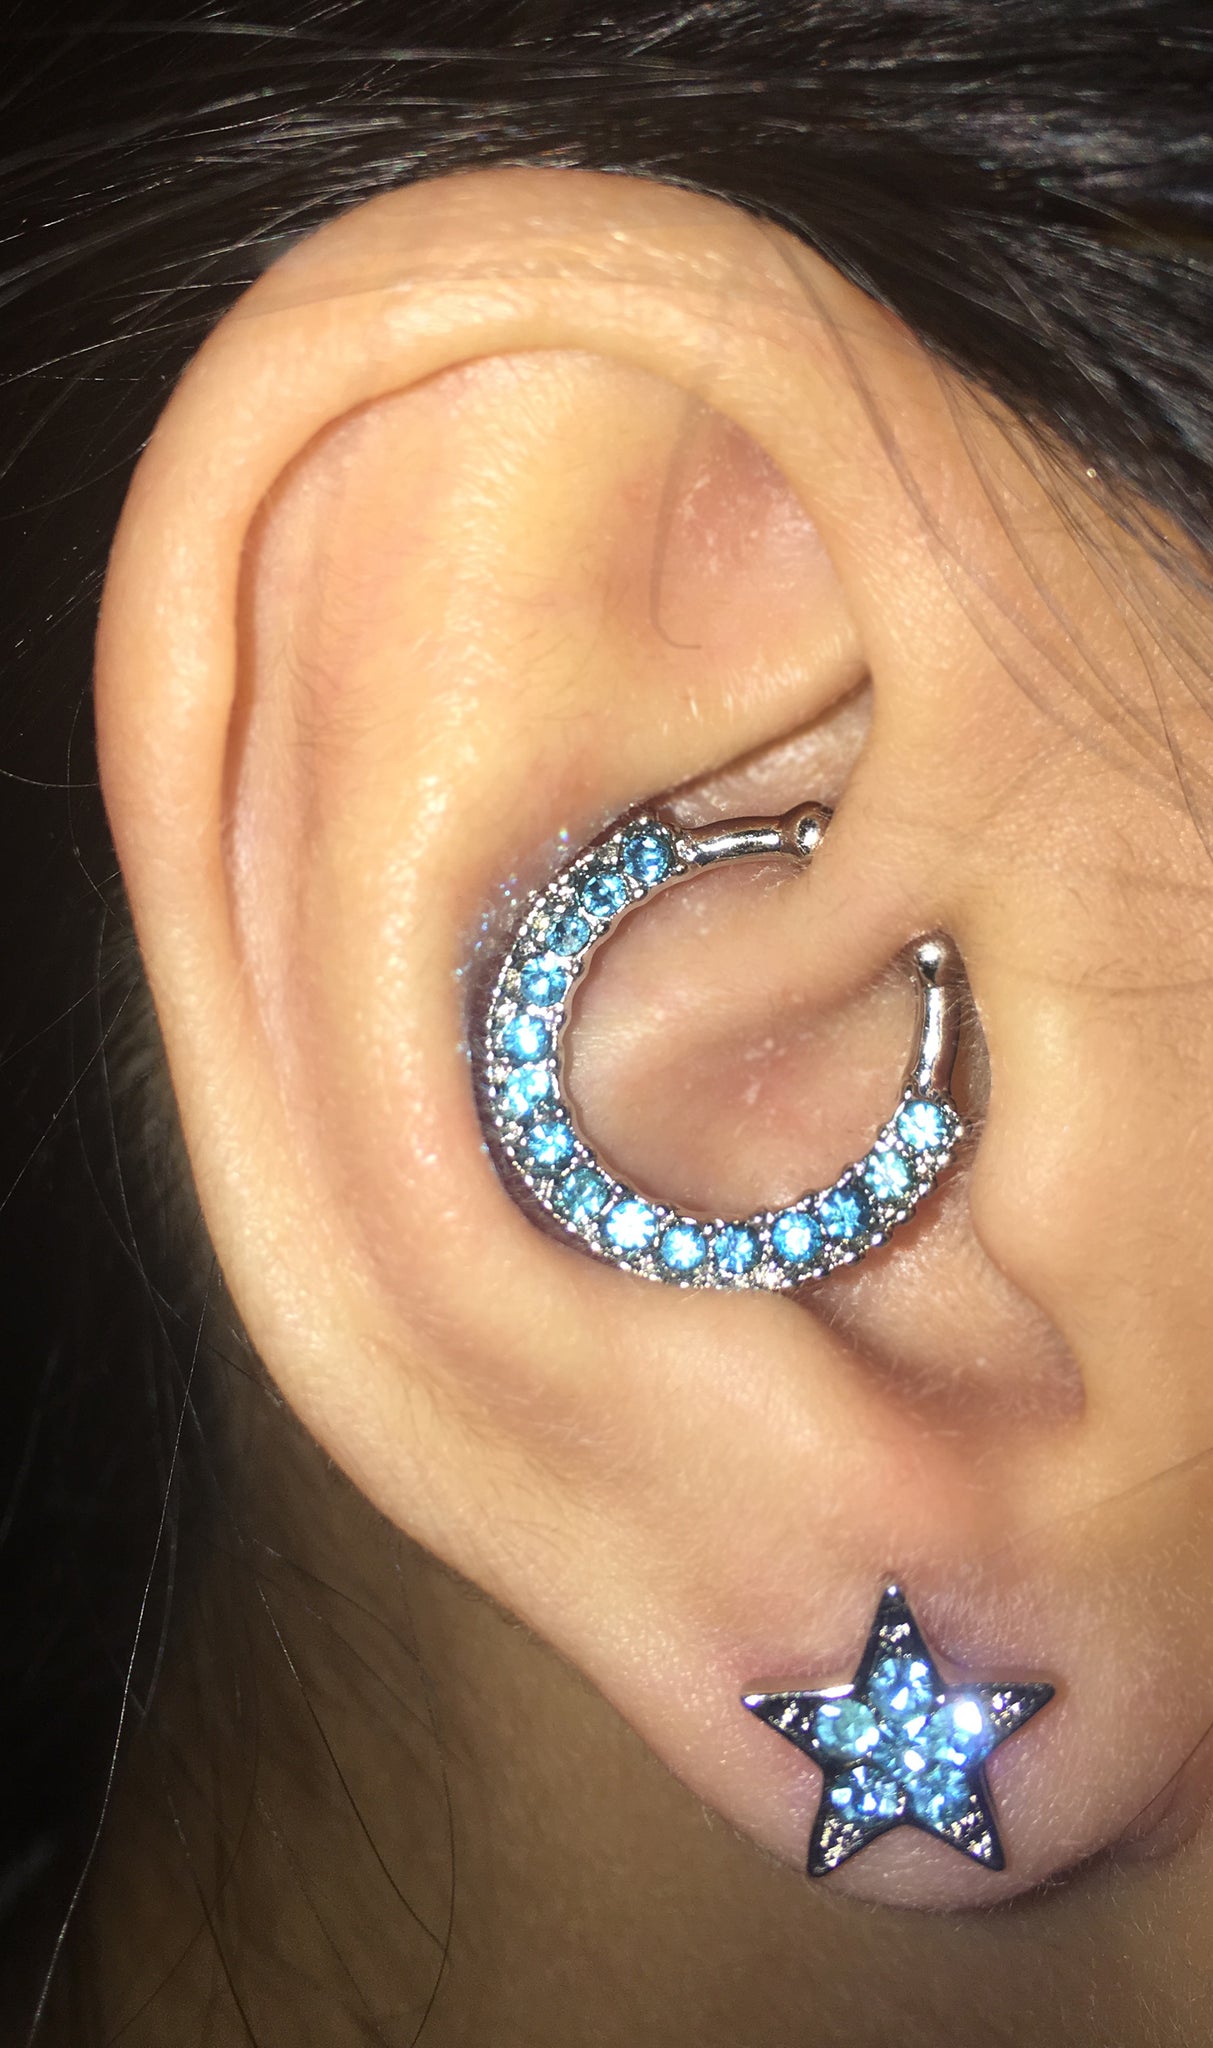 Cute Ear Piercing Ideas for Teens - Cartilage Helix Daith Star Earring Stud Ring Hoop - www.MyBodiArt.com